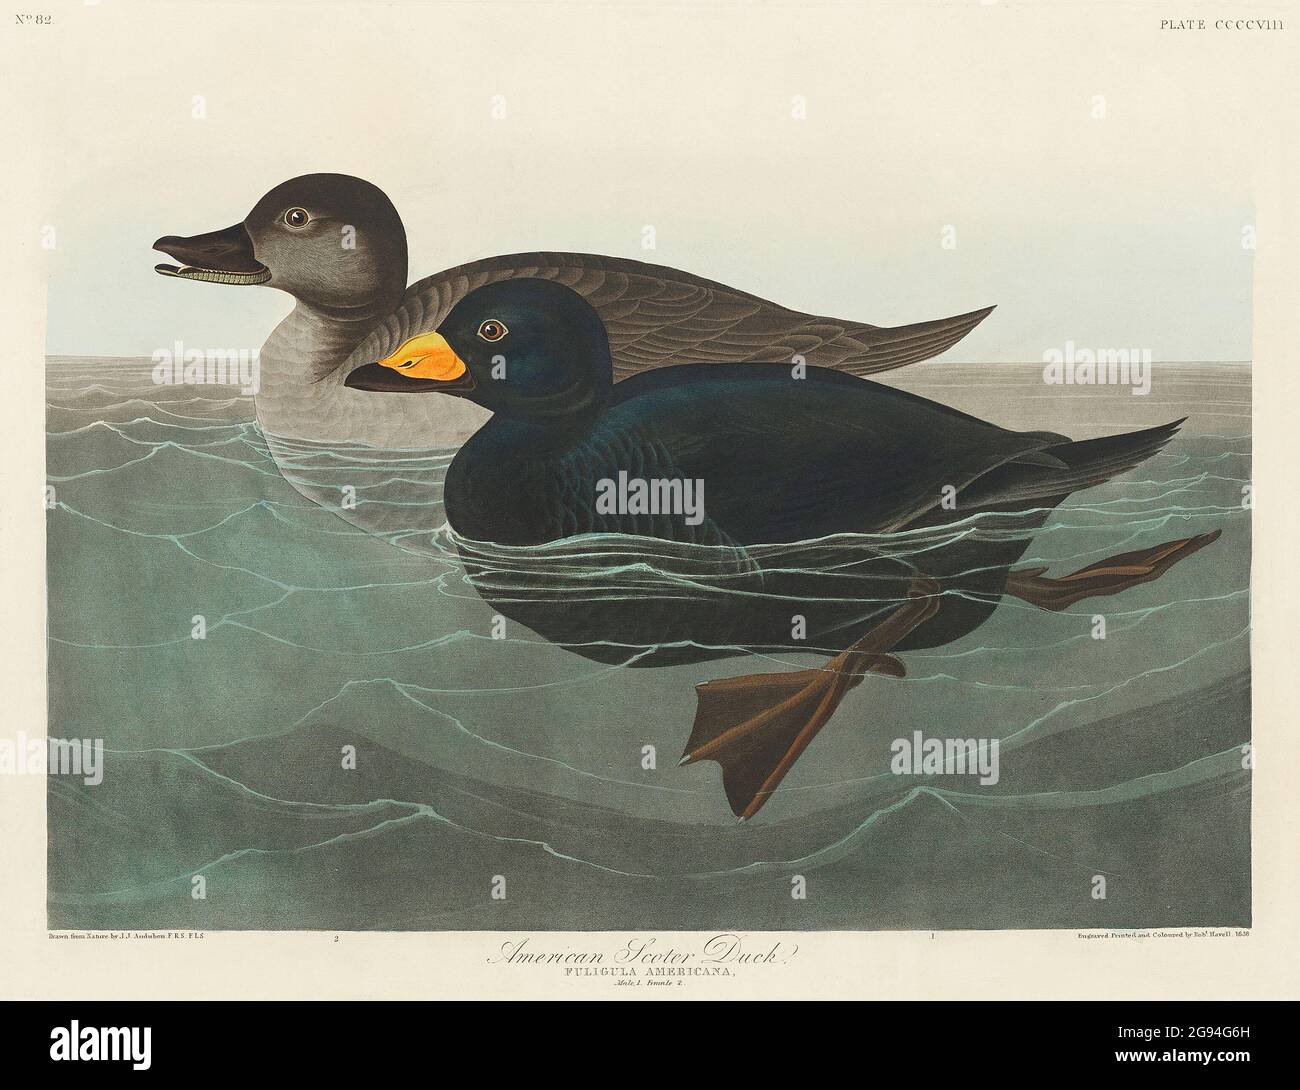 Birds of the USA Audbon illustrations, American Swan, Scoter, Sparrowhawk, flamingo, crow Stock Photo